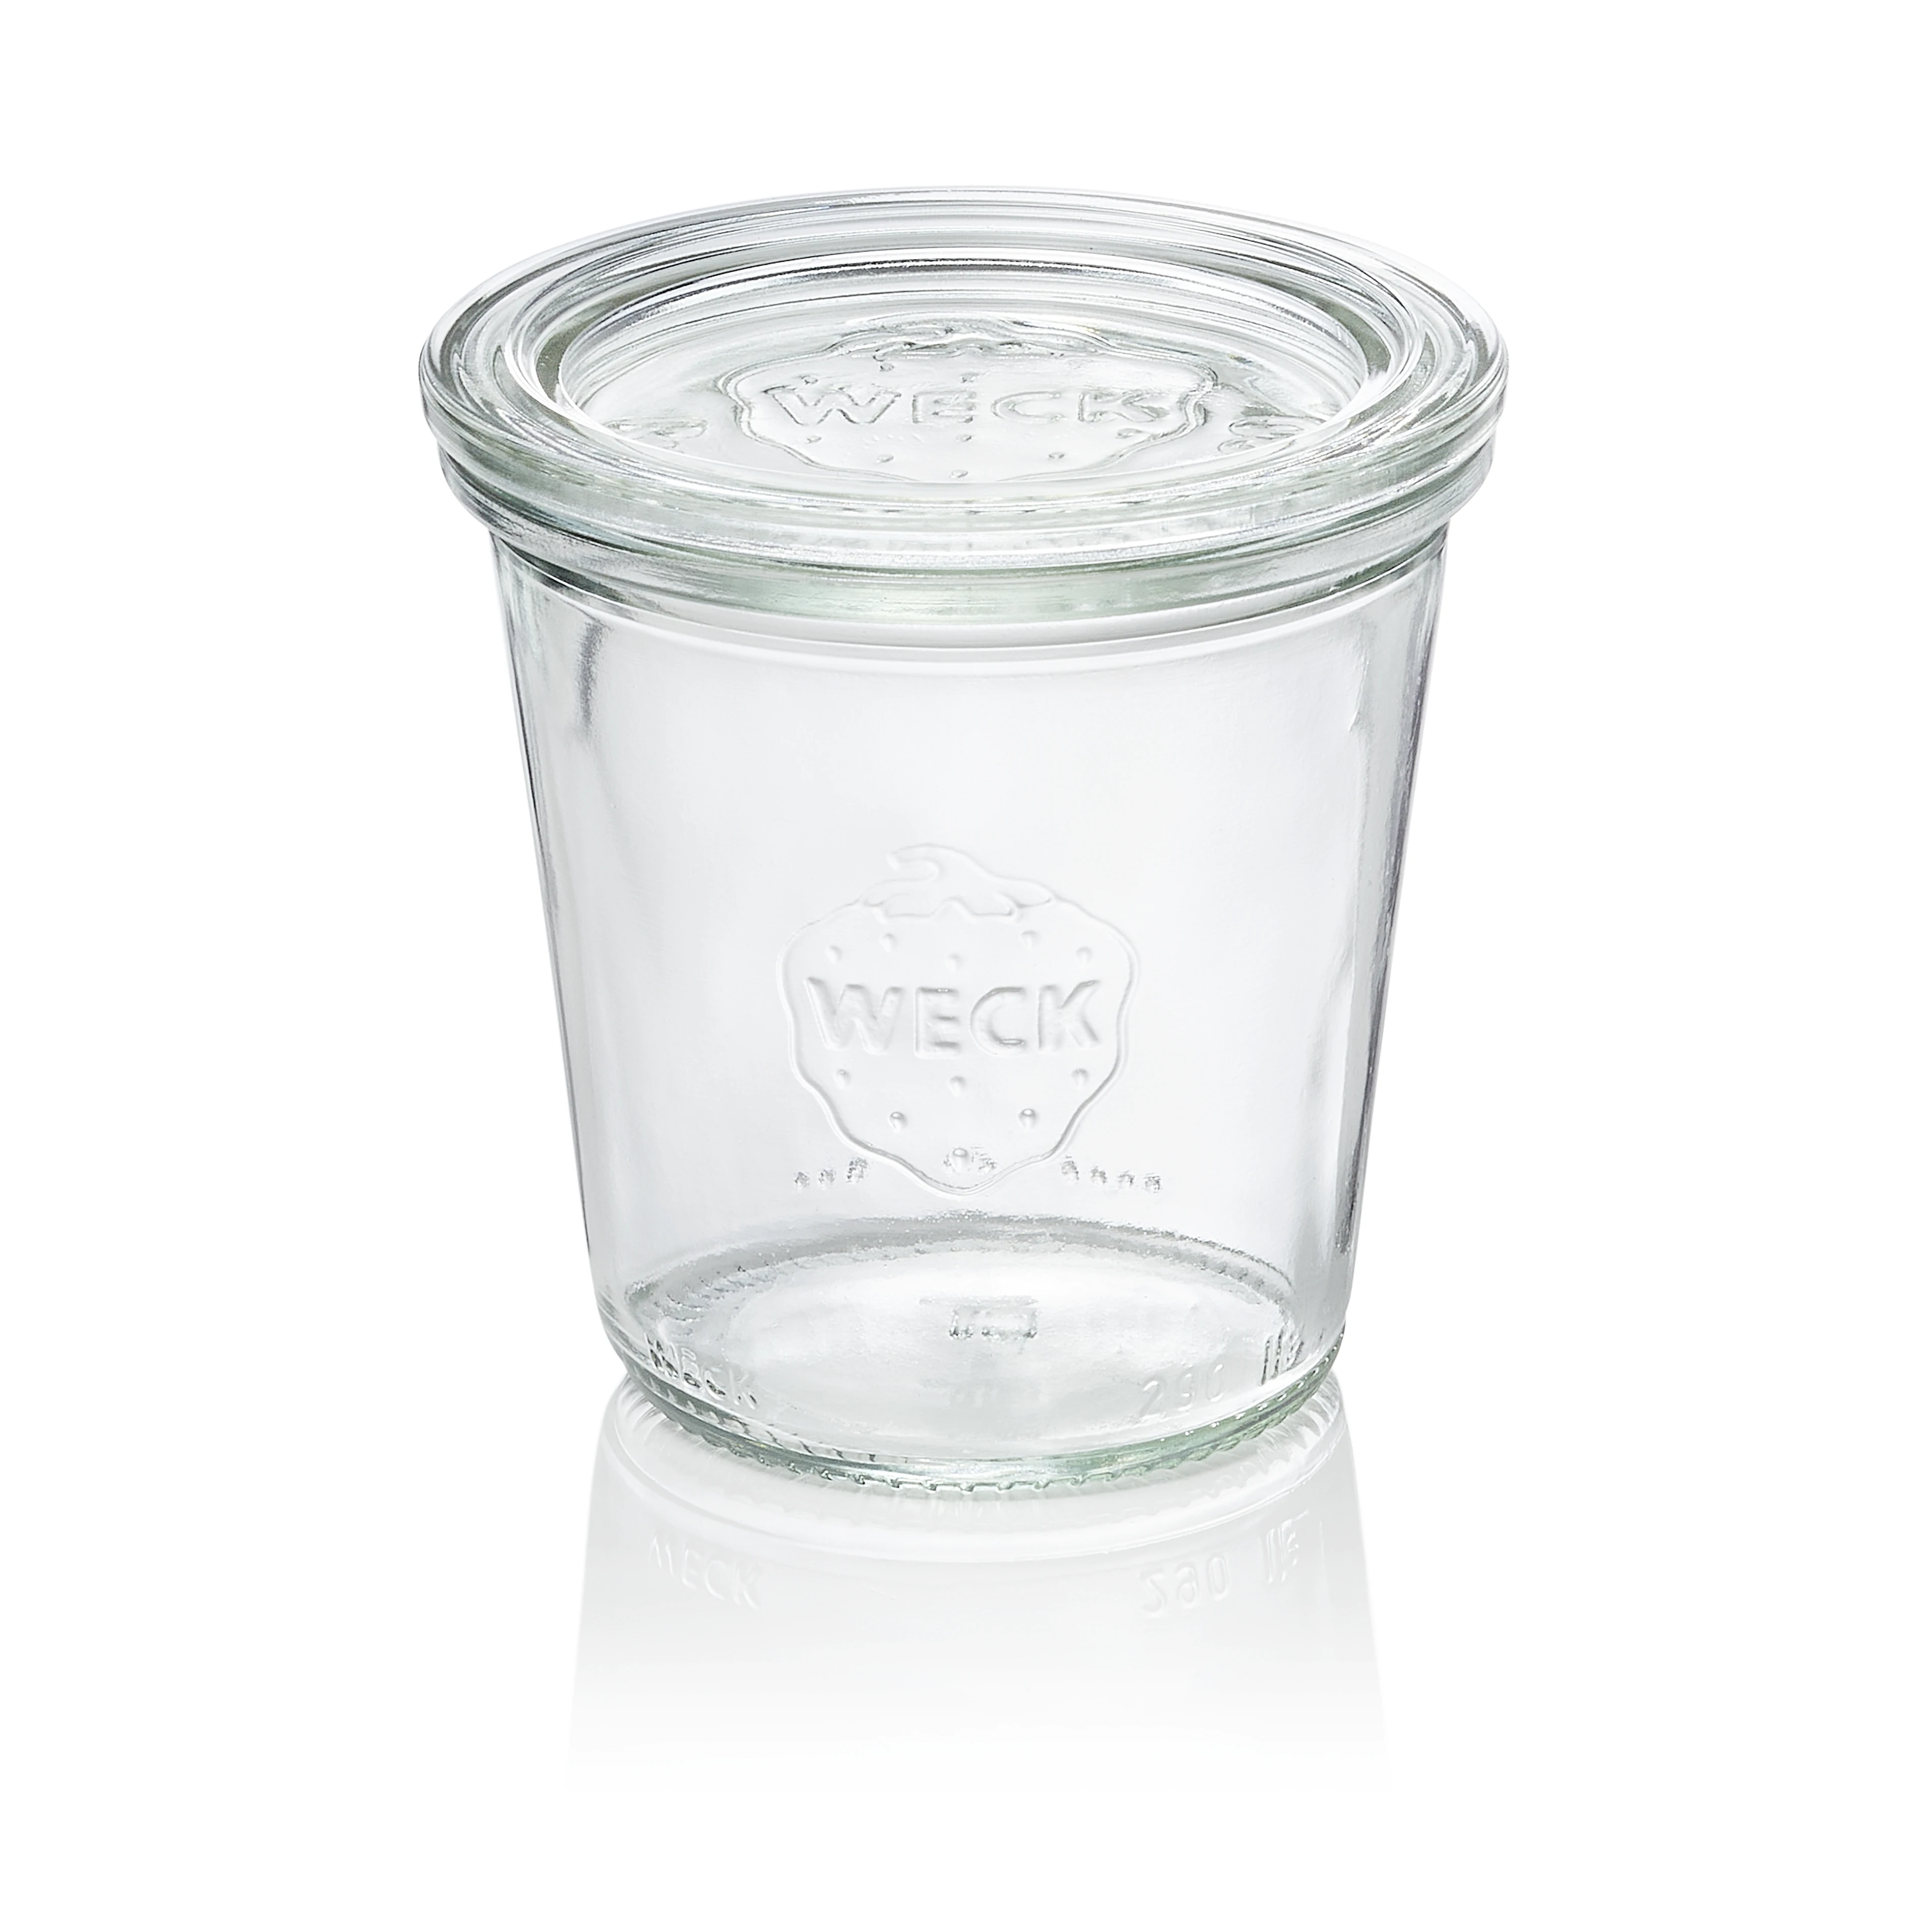 Overturn glass jar